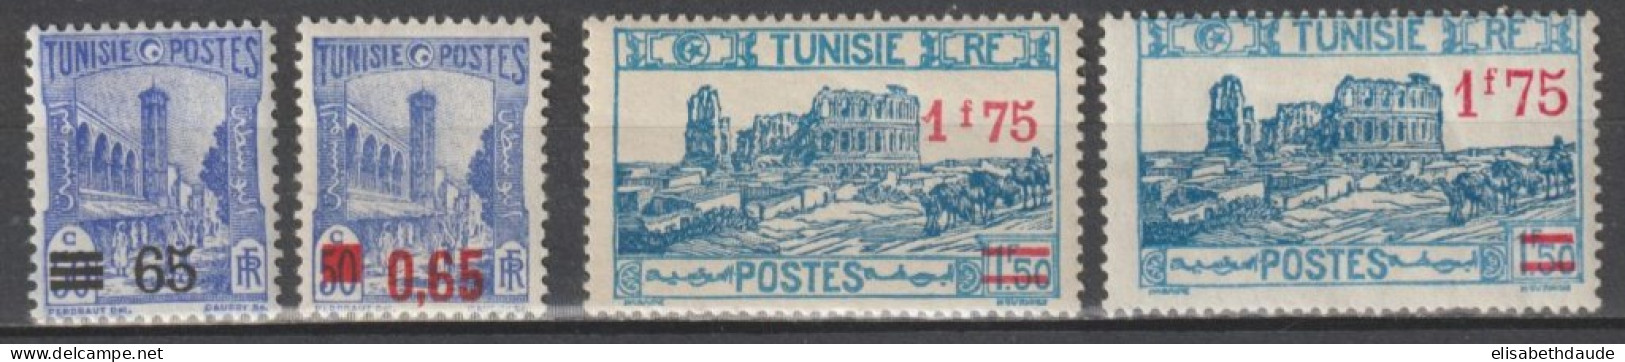 TUNISIE - 1937 - ANNEE COMPLETE - YVERT N° 182/184A * MLH - COTE = 21.75 EUR. - Nuovi